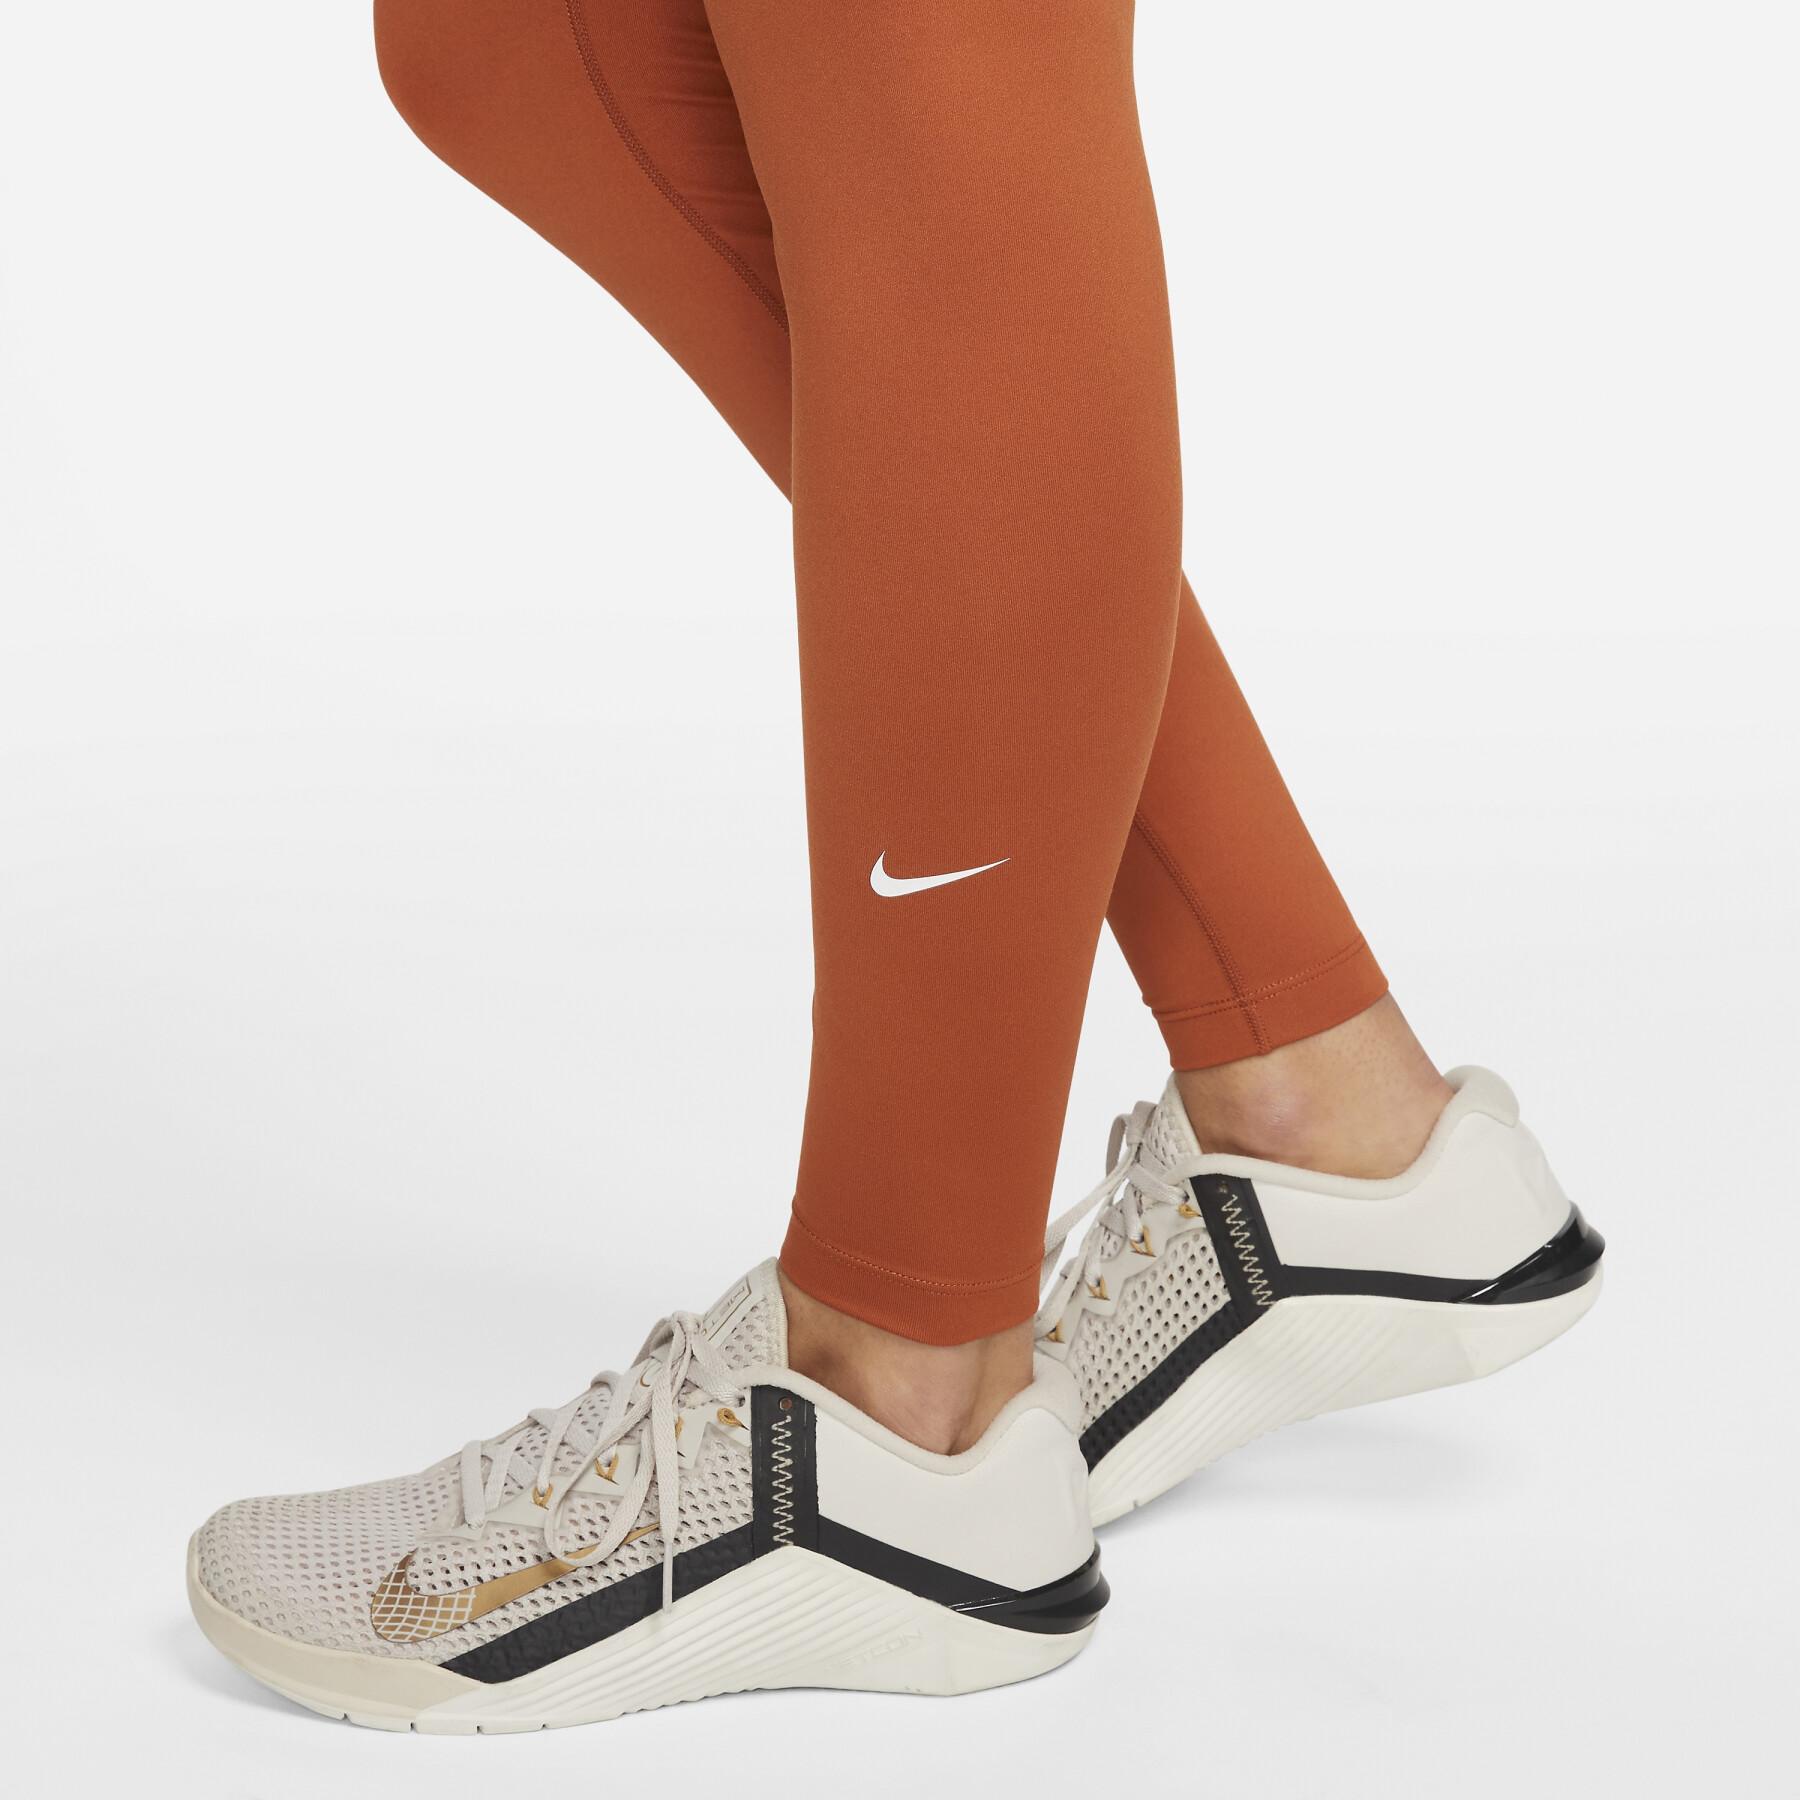 Legging mujer Nike One